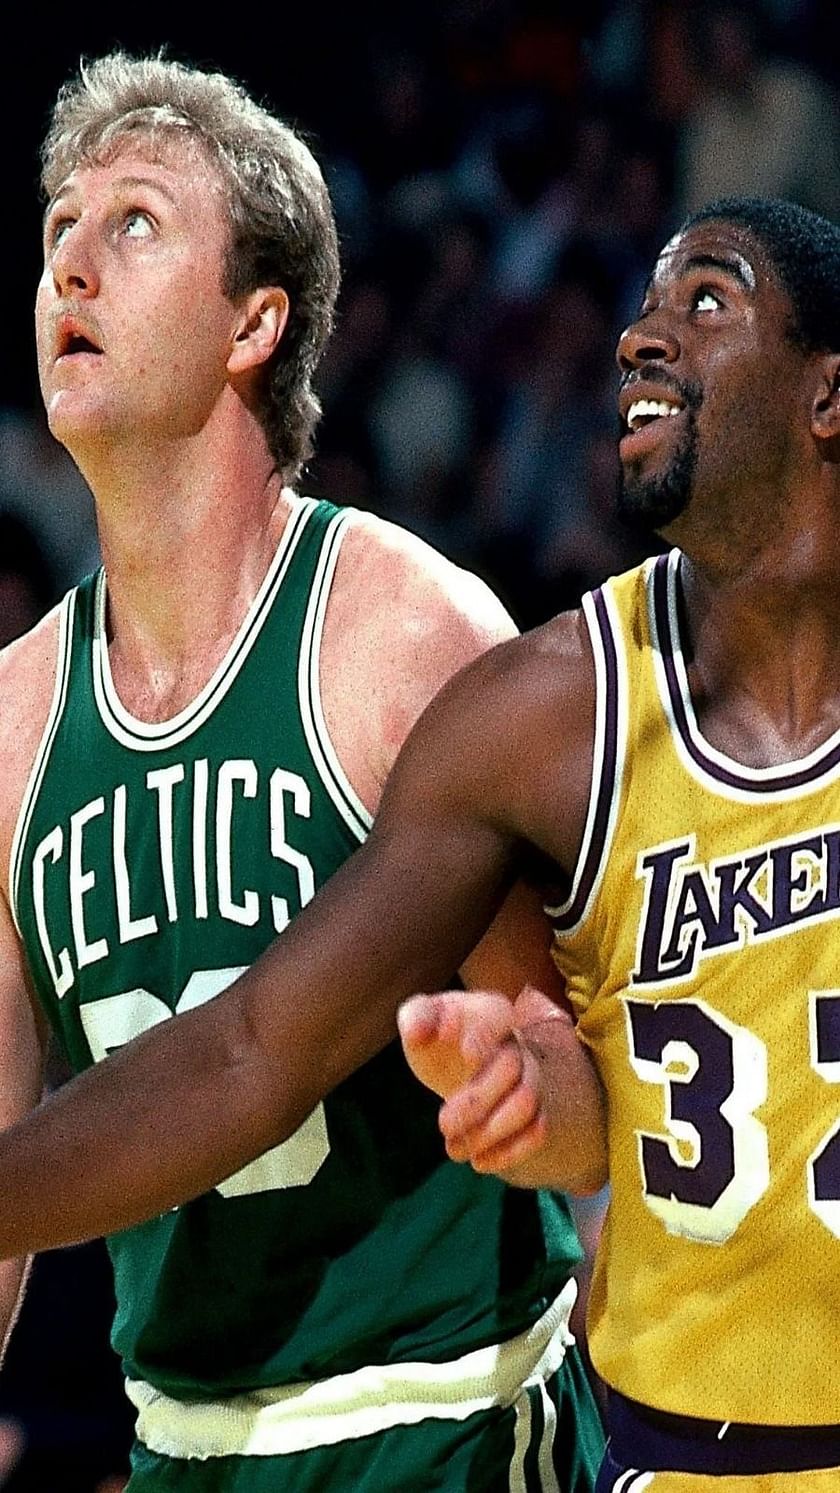 Kobe Bryant, Willis Reed, Larry Bird part of NBA's greatest moments